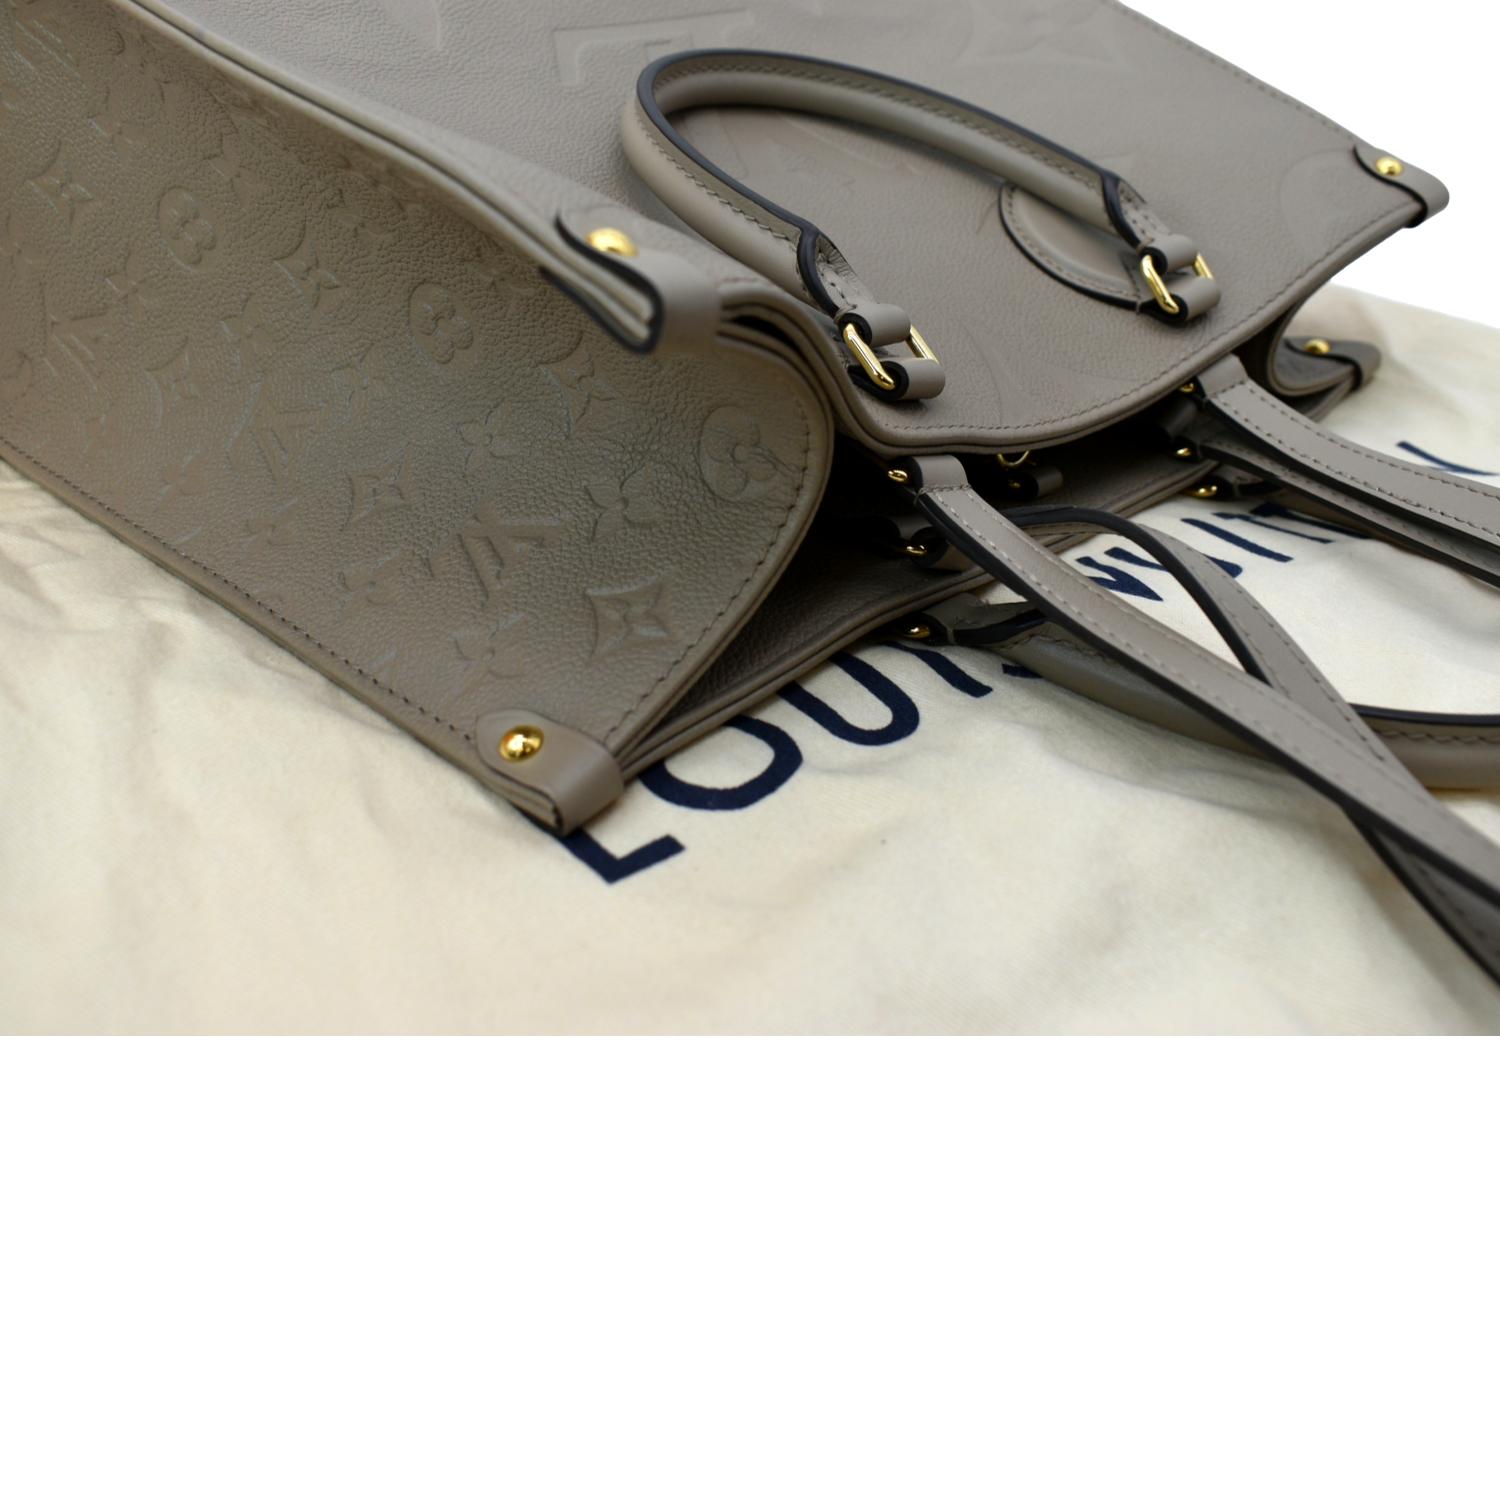 Louis Vuitton Carryall mm Turtledove Monogram Empreinte